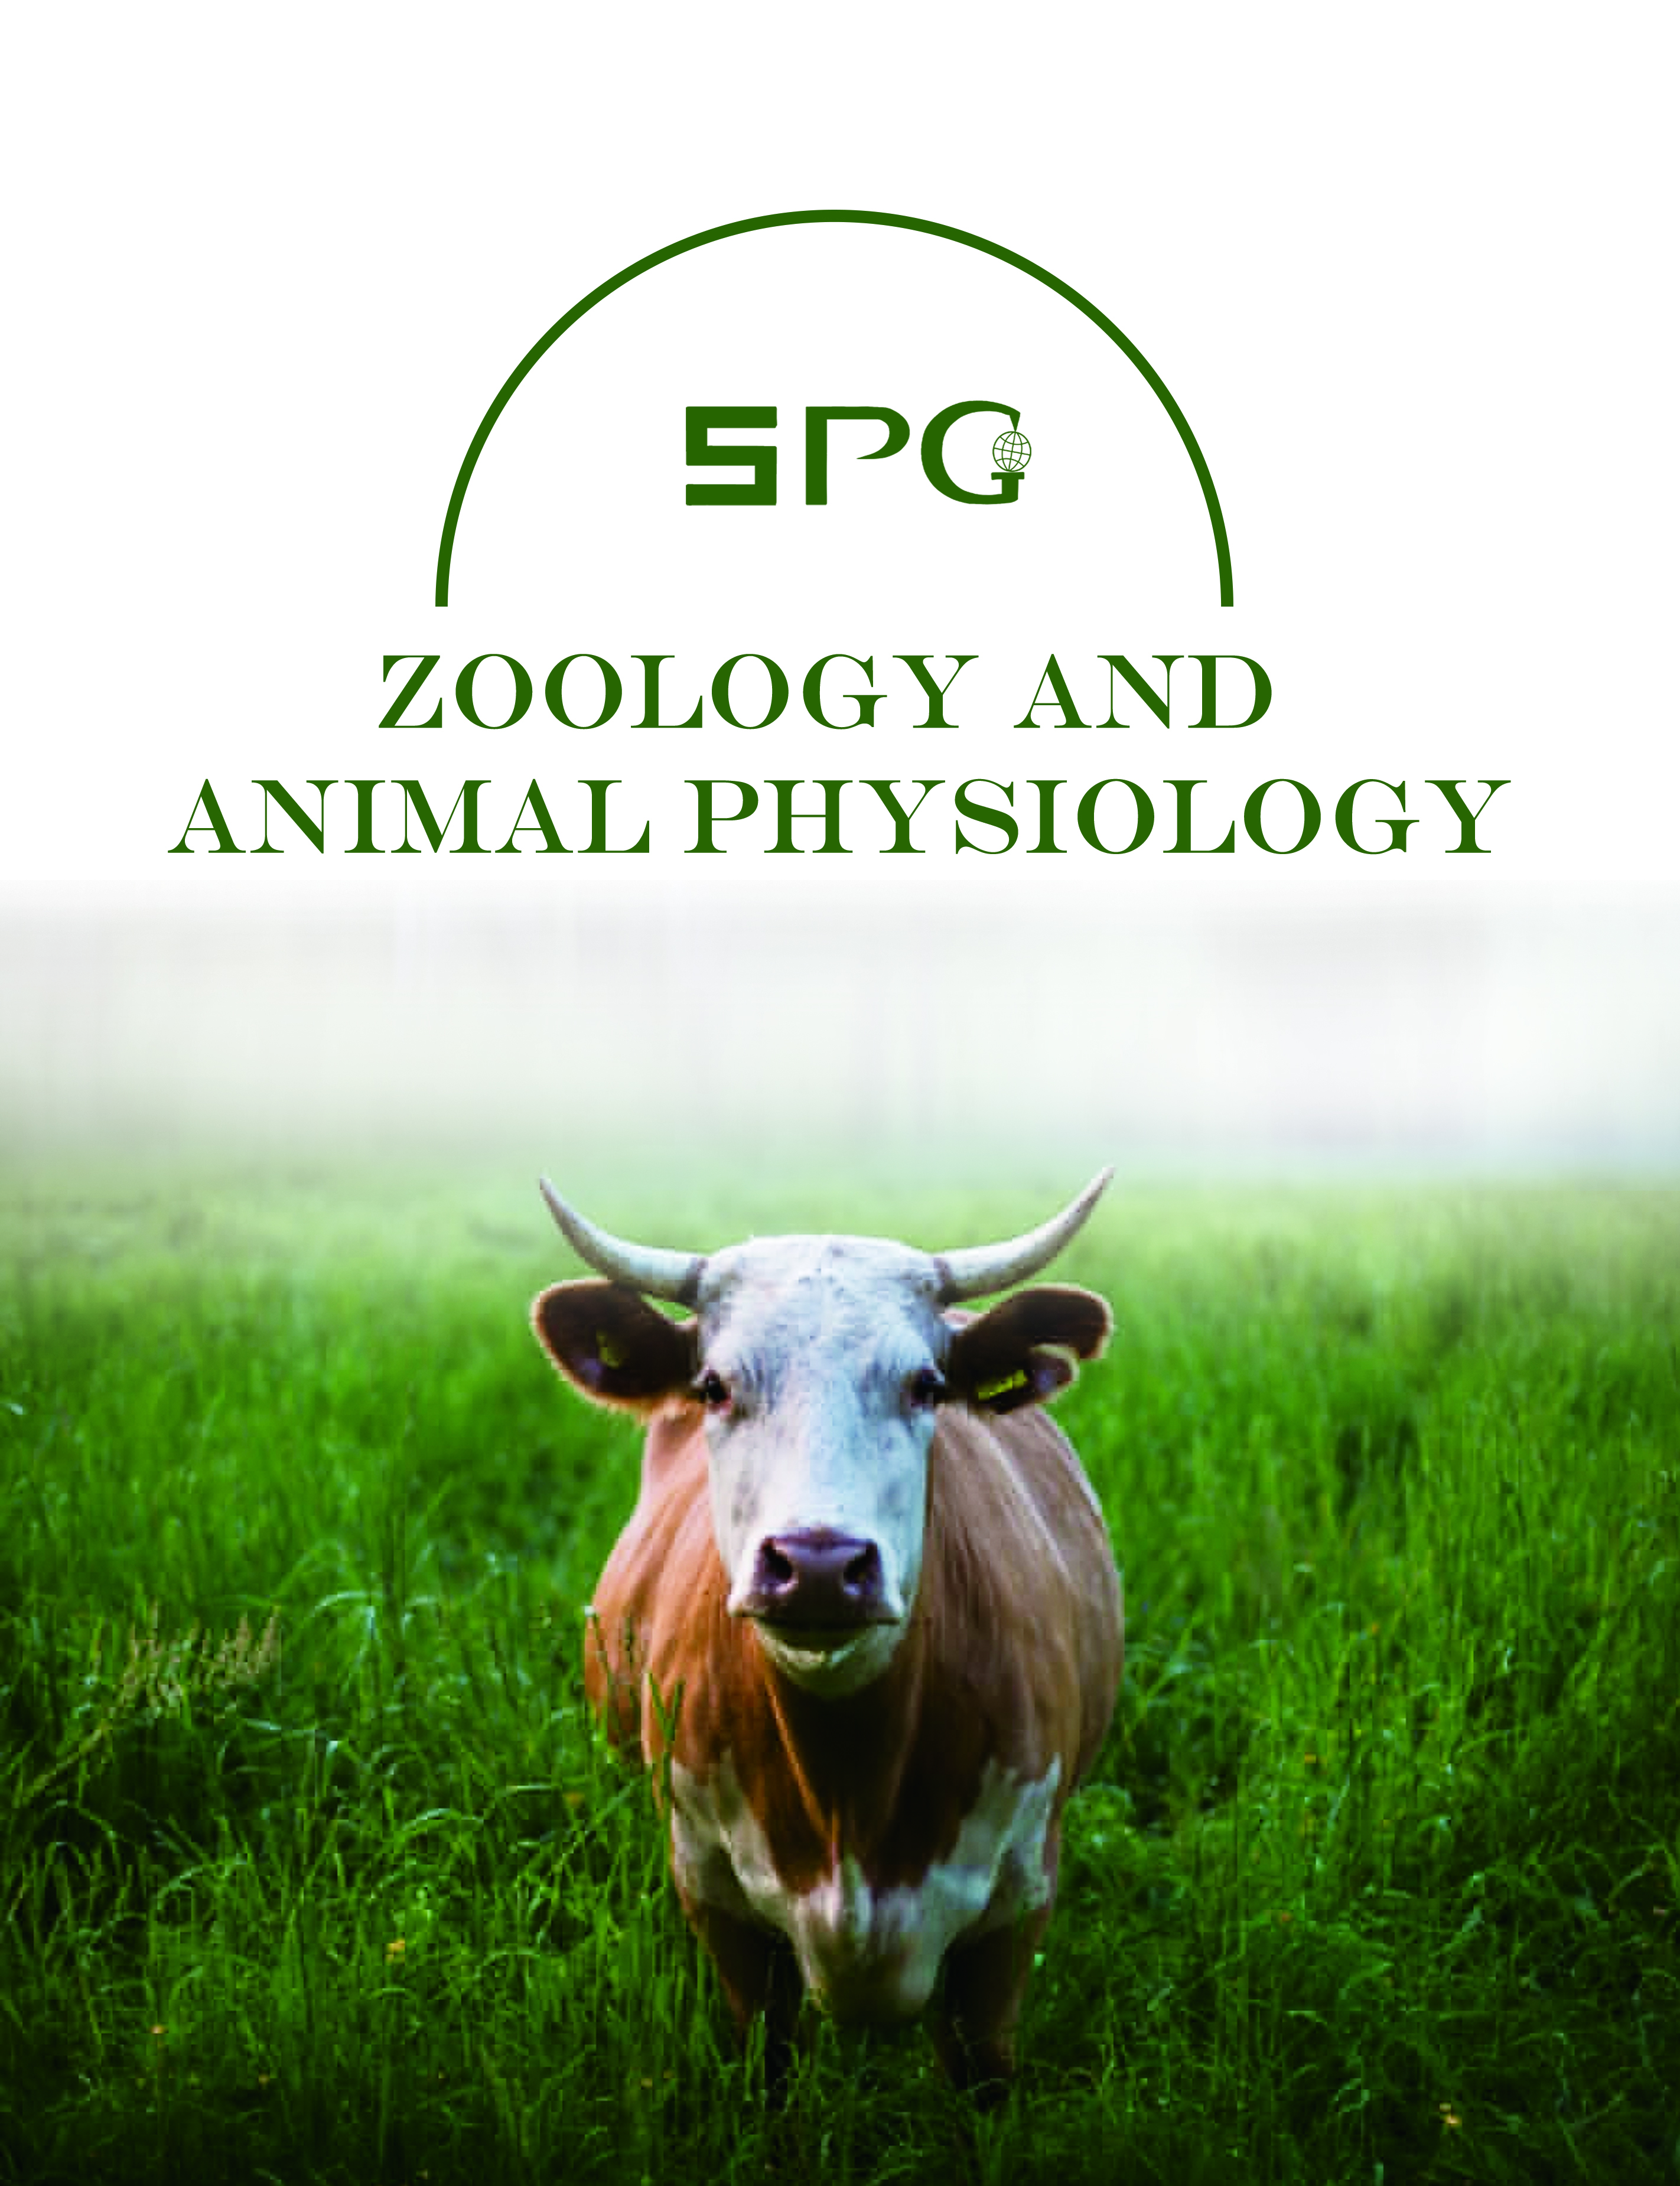 Zoology and Animal Physiology | Scholar Publishing Group